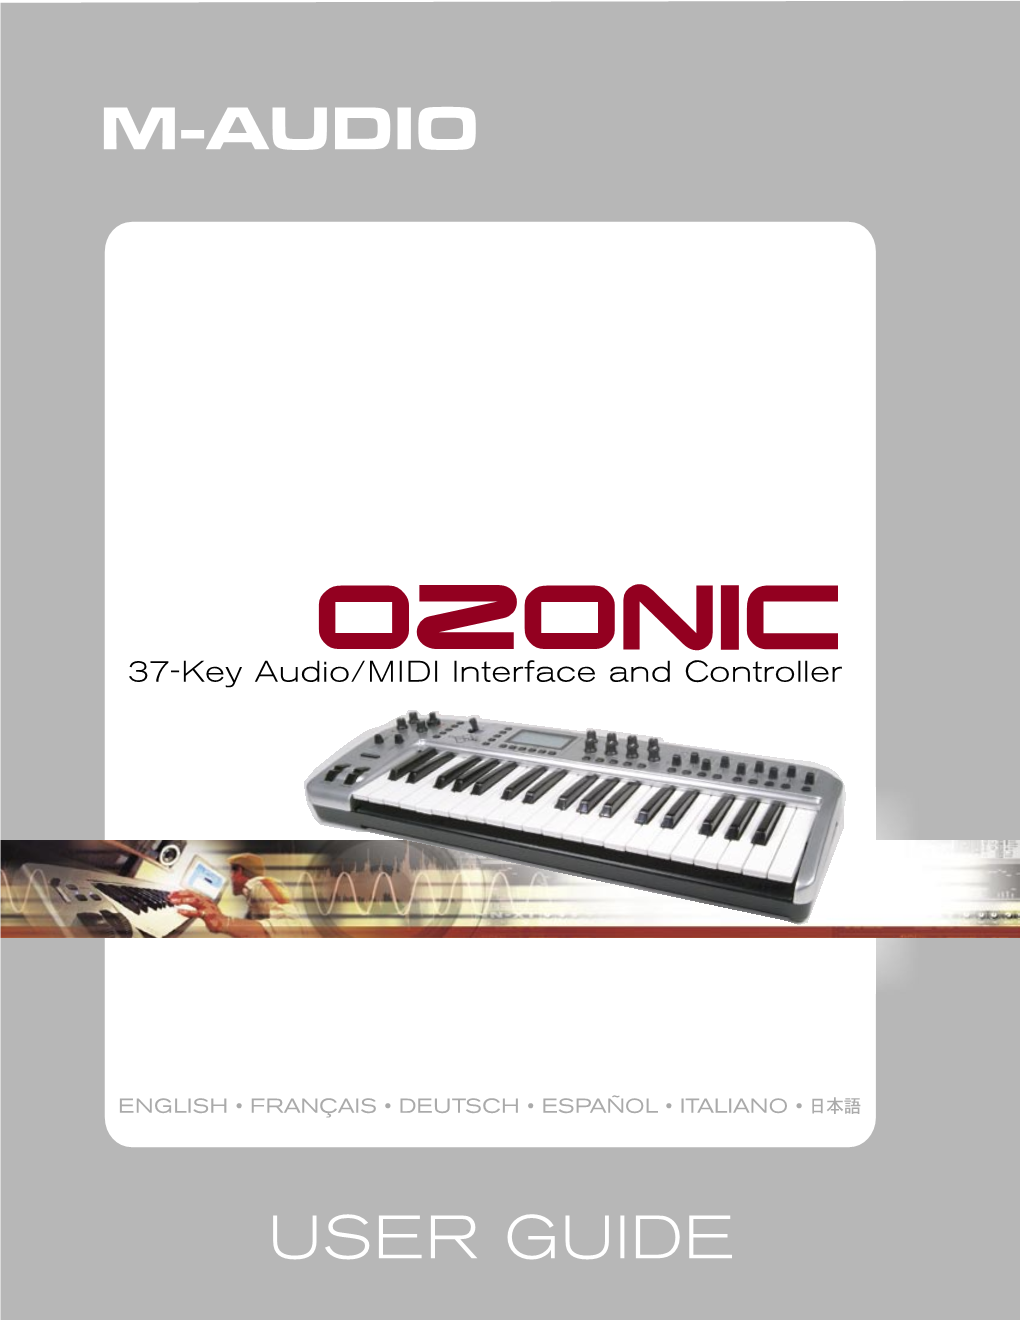 M-Audio Ozonic User Guide